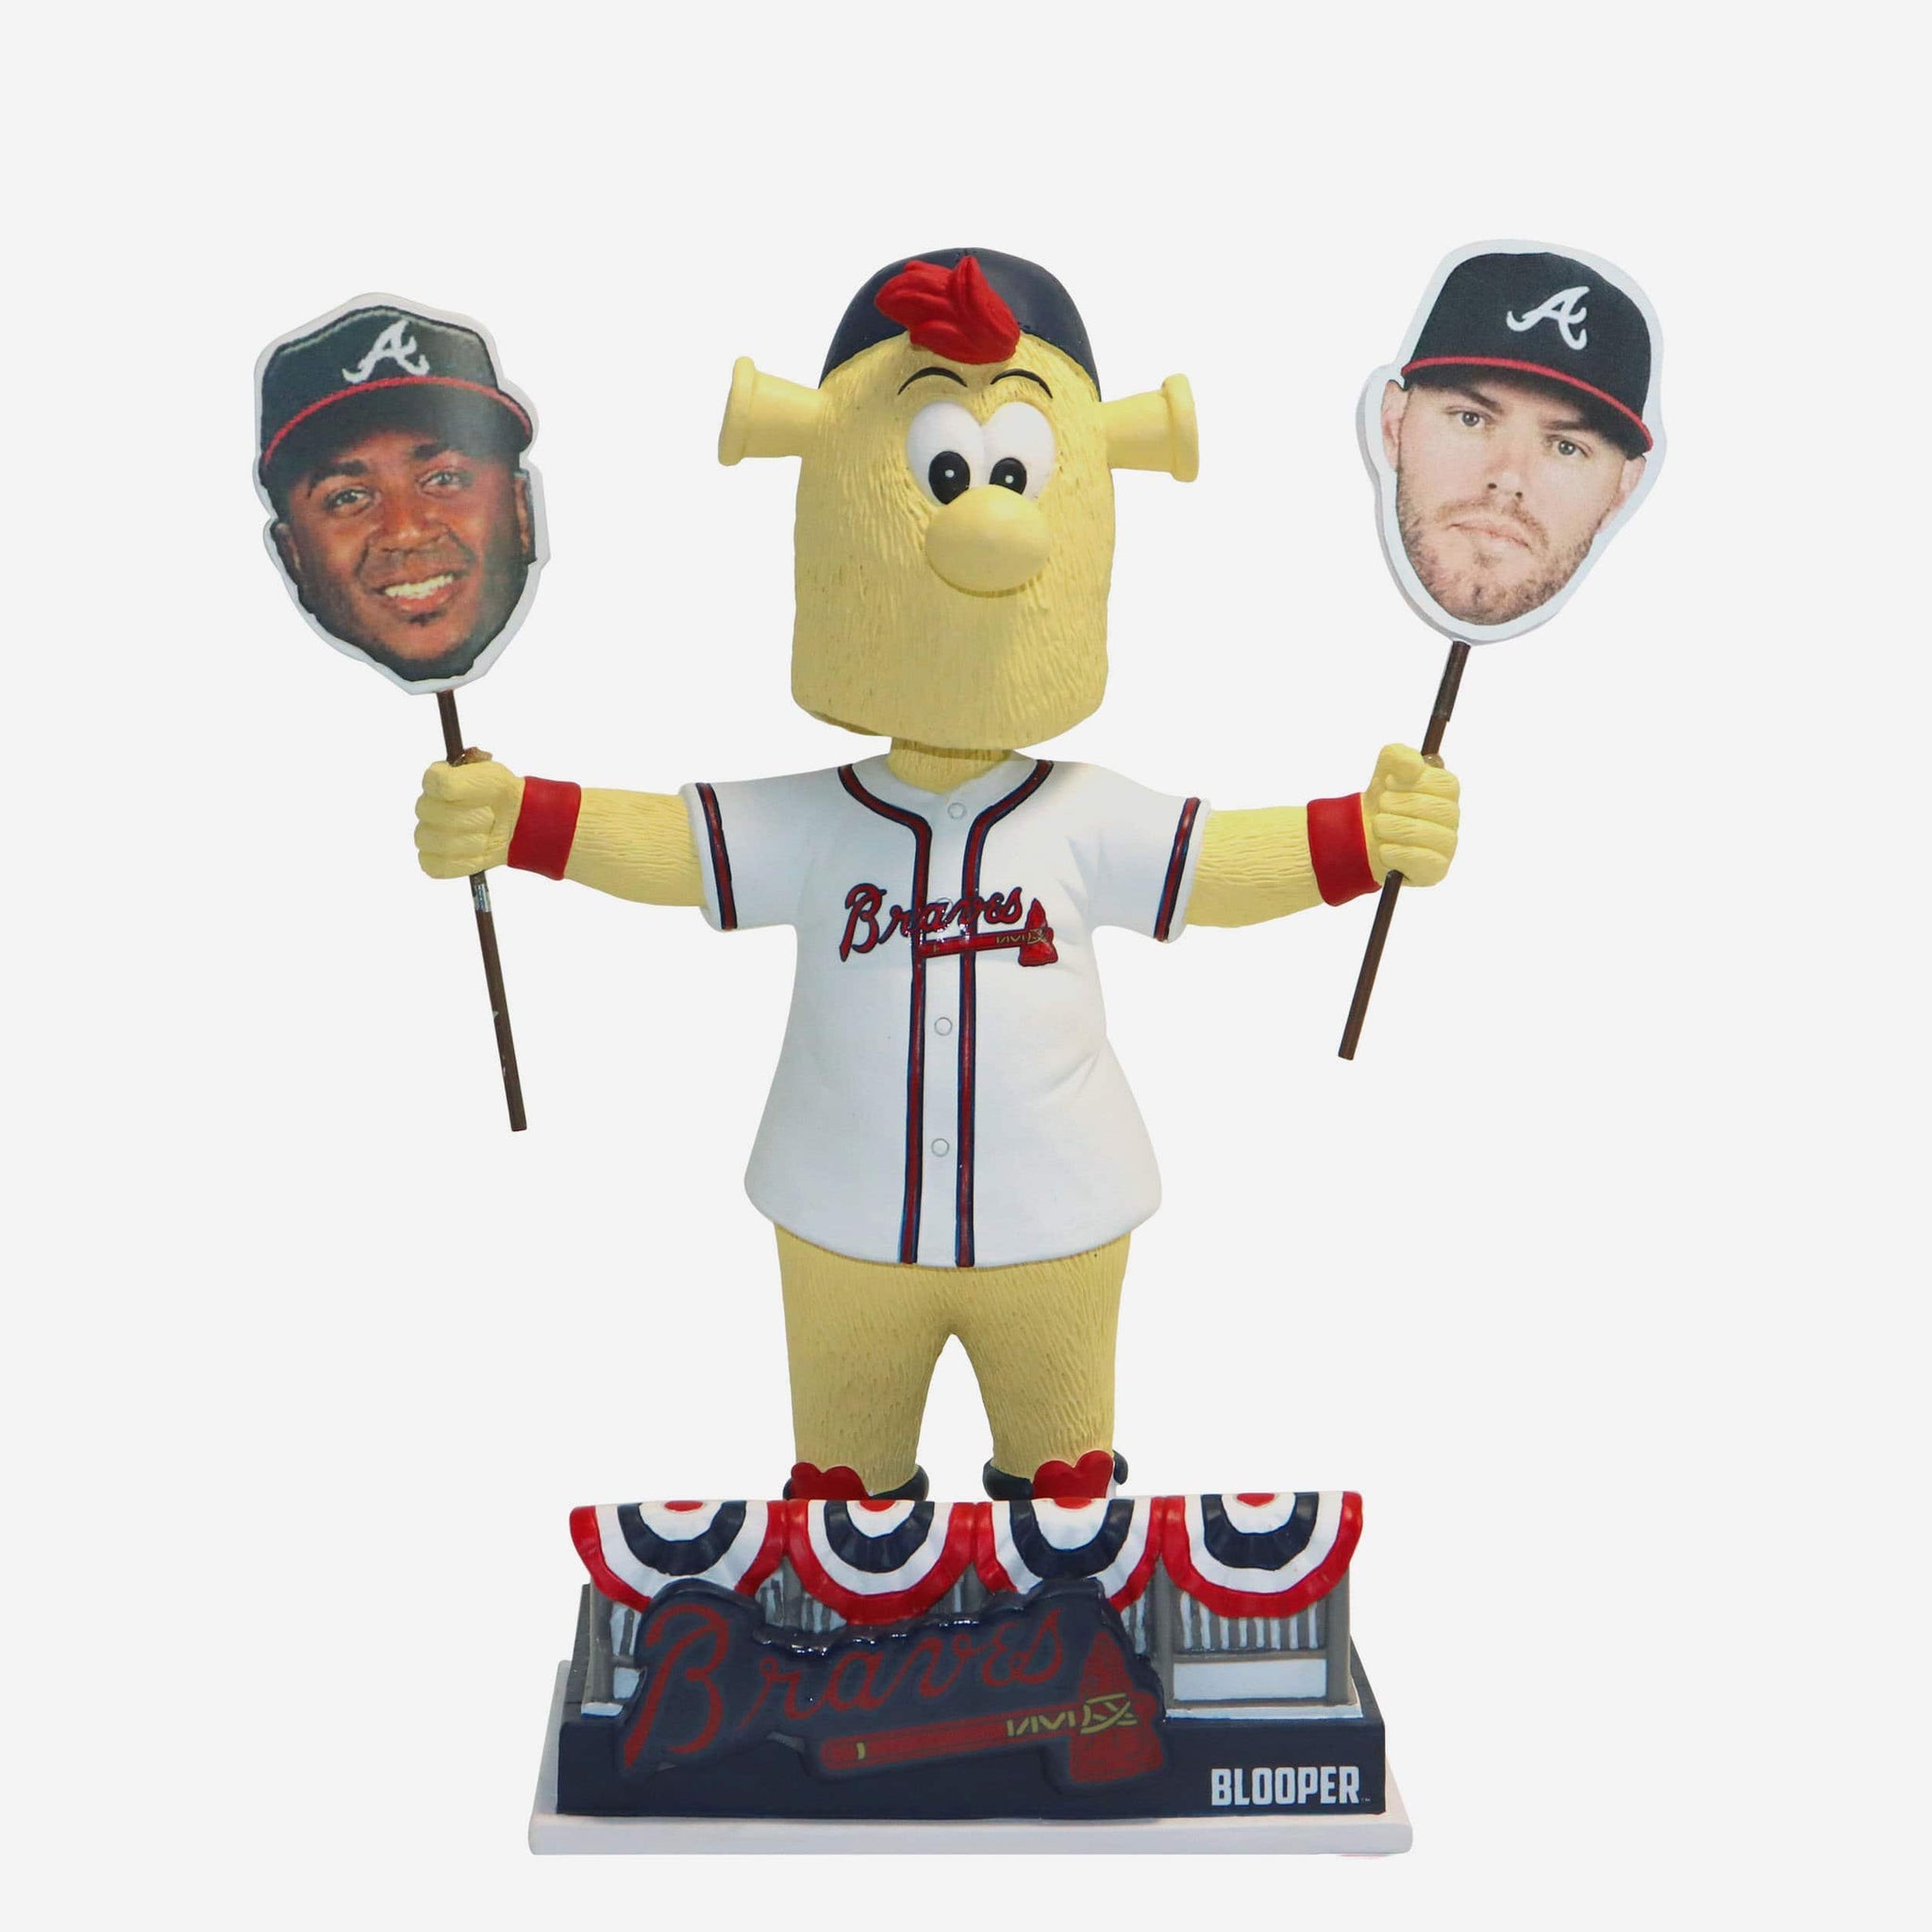 Atlanta Braves mascot Blooper makes debut in MLB The Show 19 